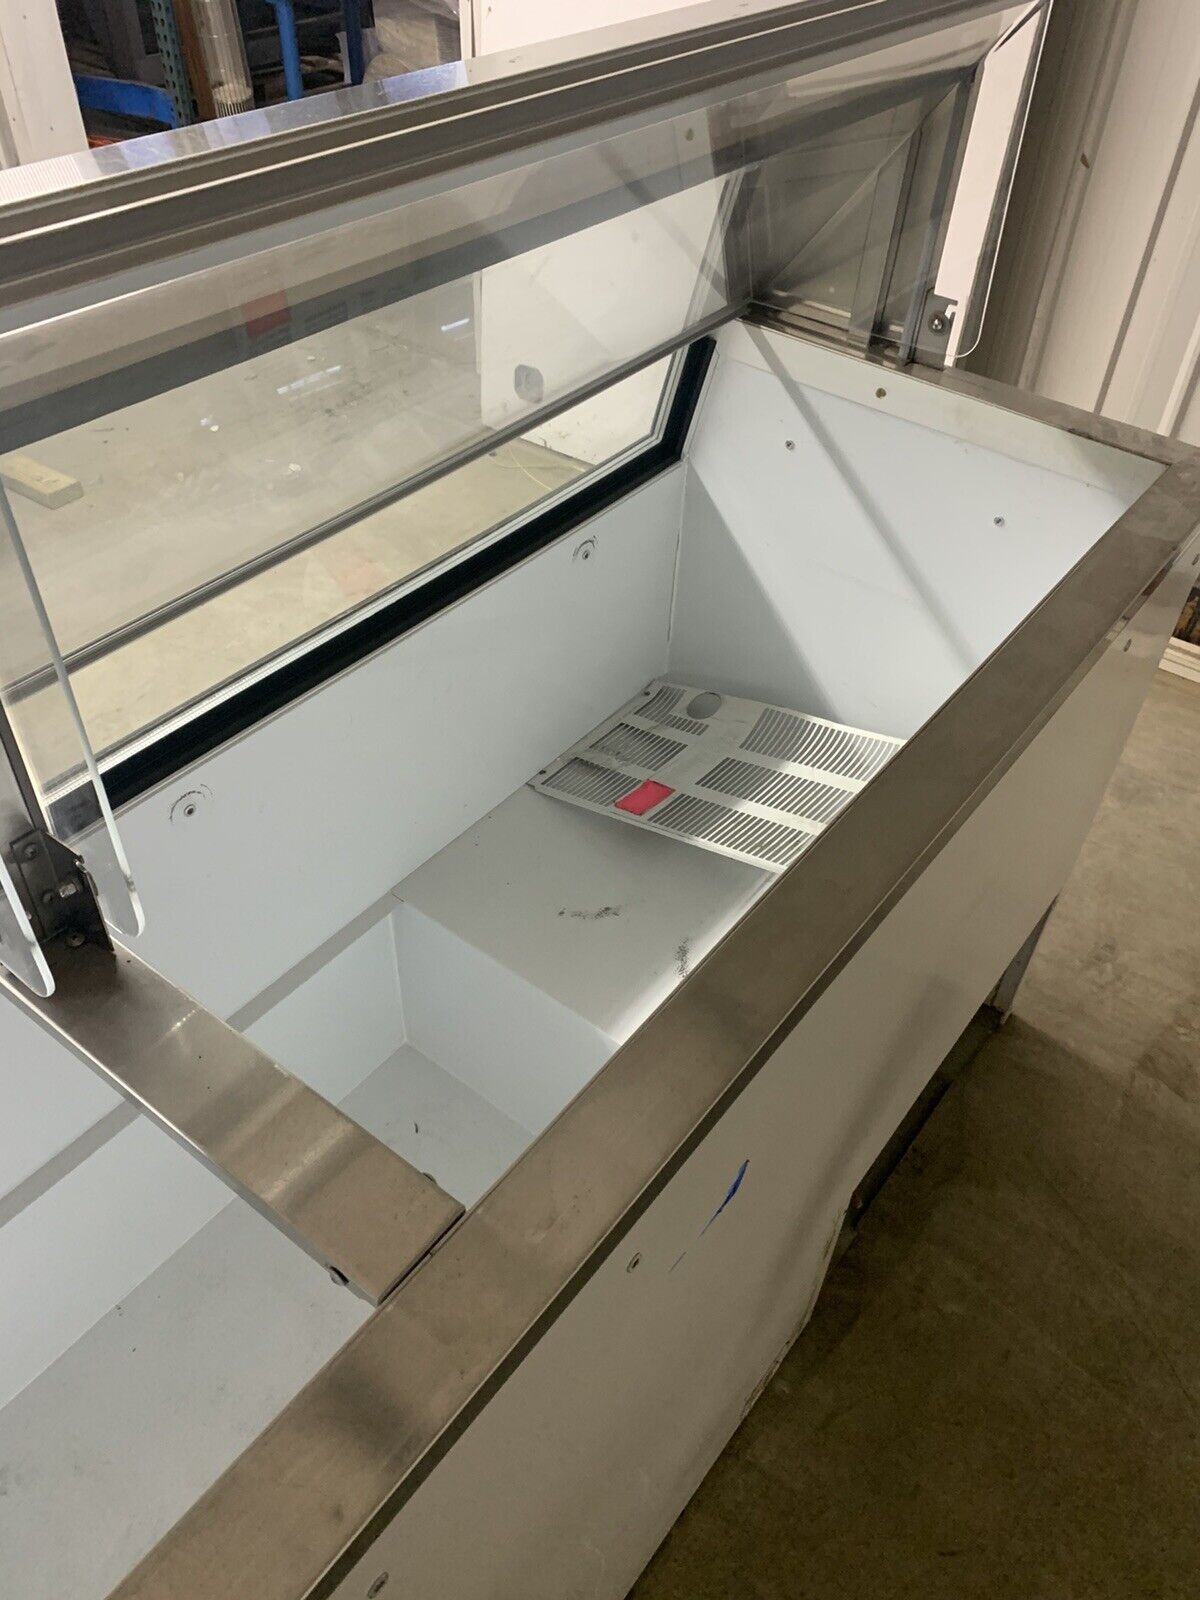 Master-Bilt DD-88L Ice Cream Dipping Display Station Freezer - No Compressor